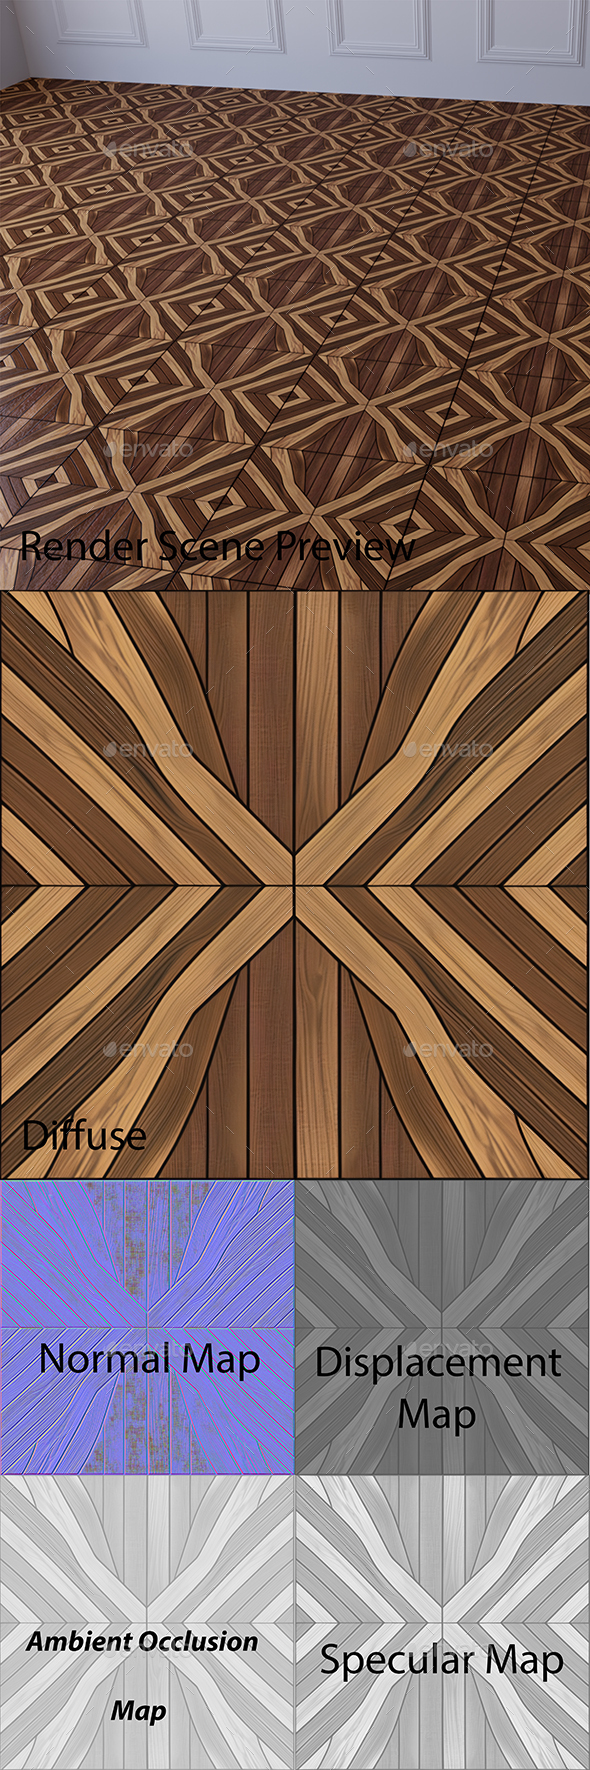 Seamless Wooden Parquet Textures 2